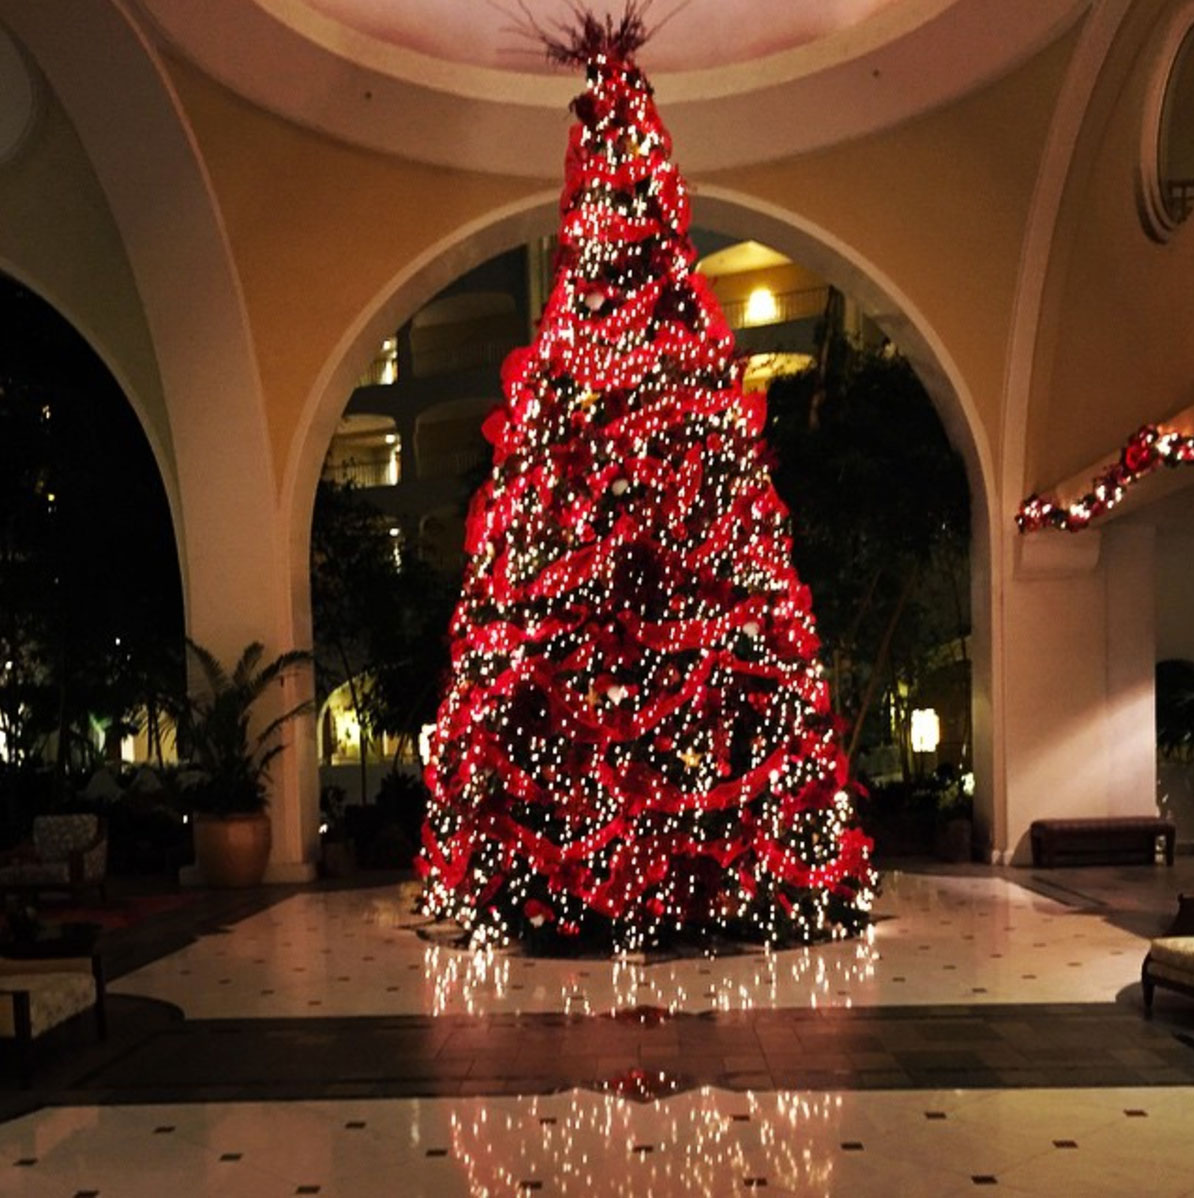 Giant holiday tree in hotel lobby